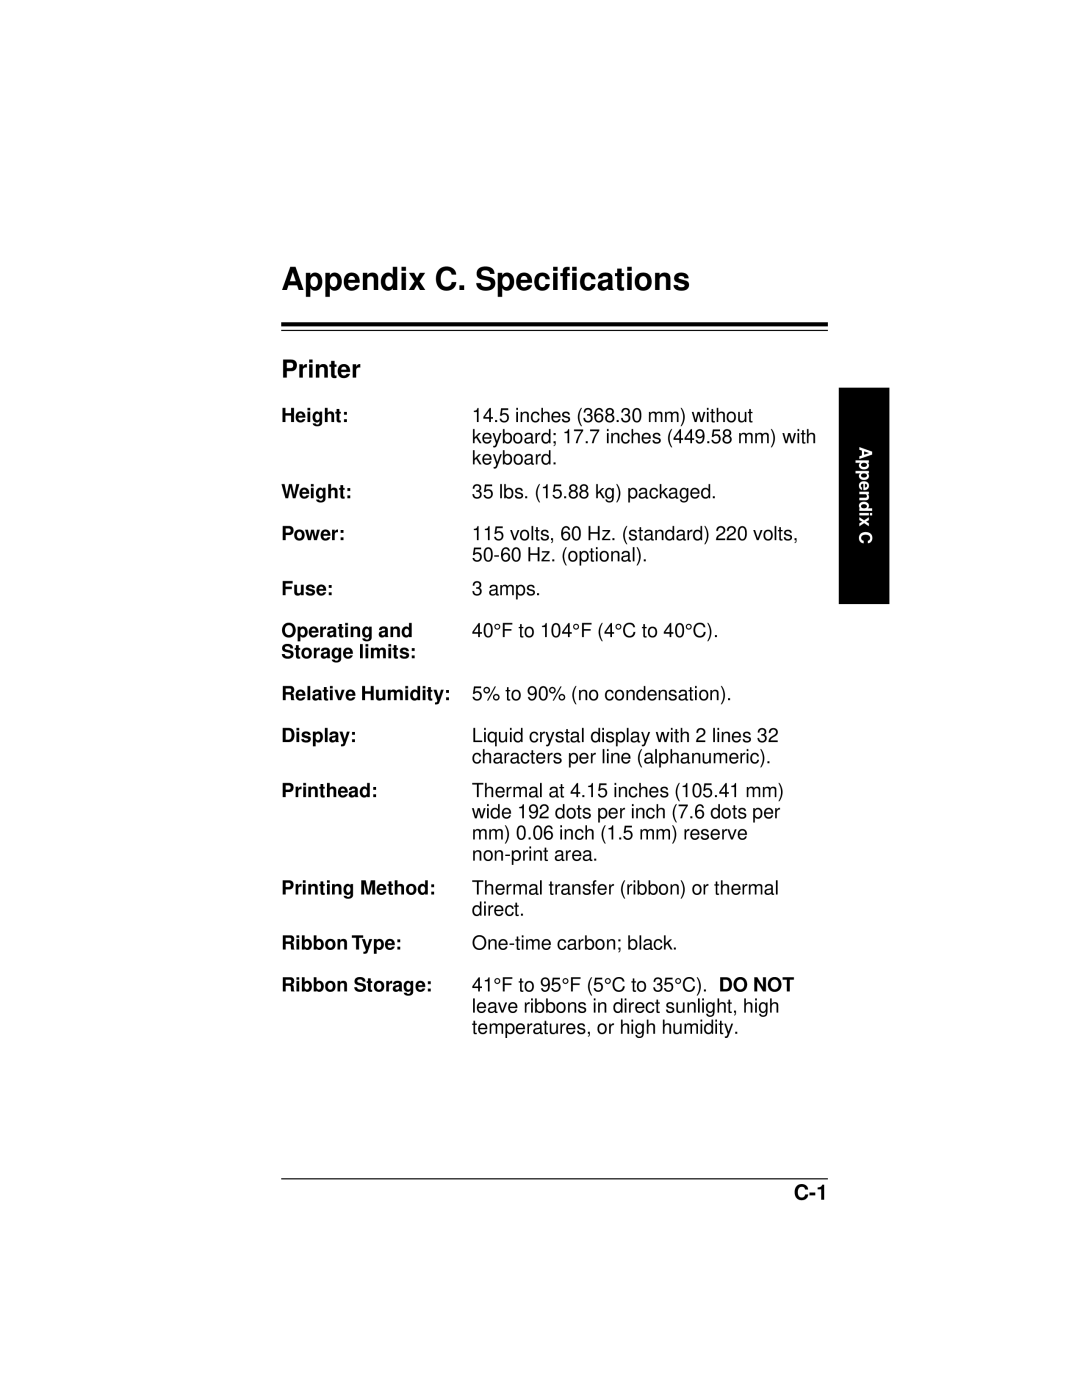 Paxar 9445 manual Appendix C. Specifications, Printer 